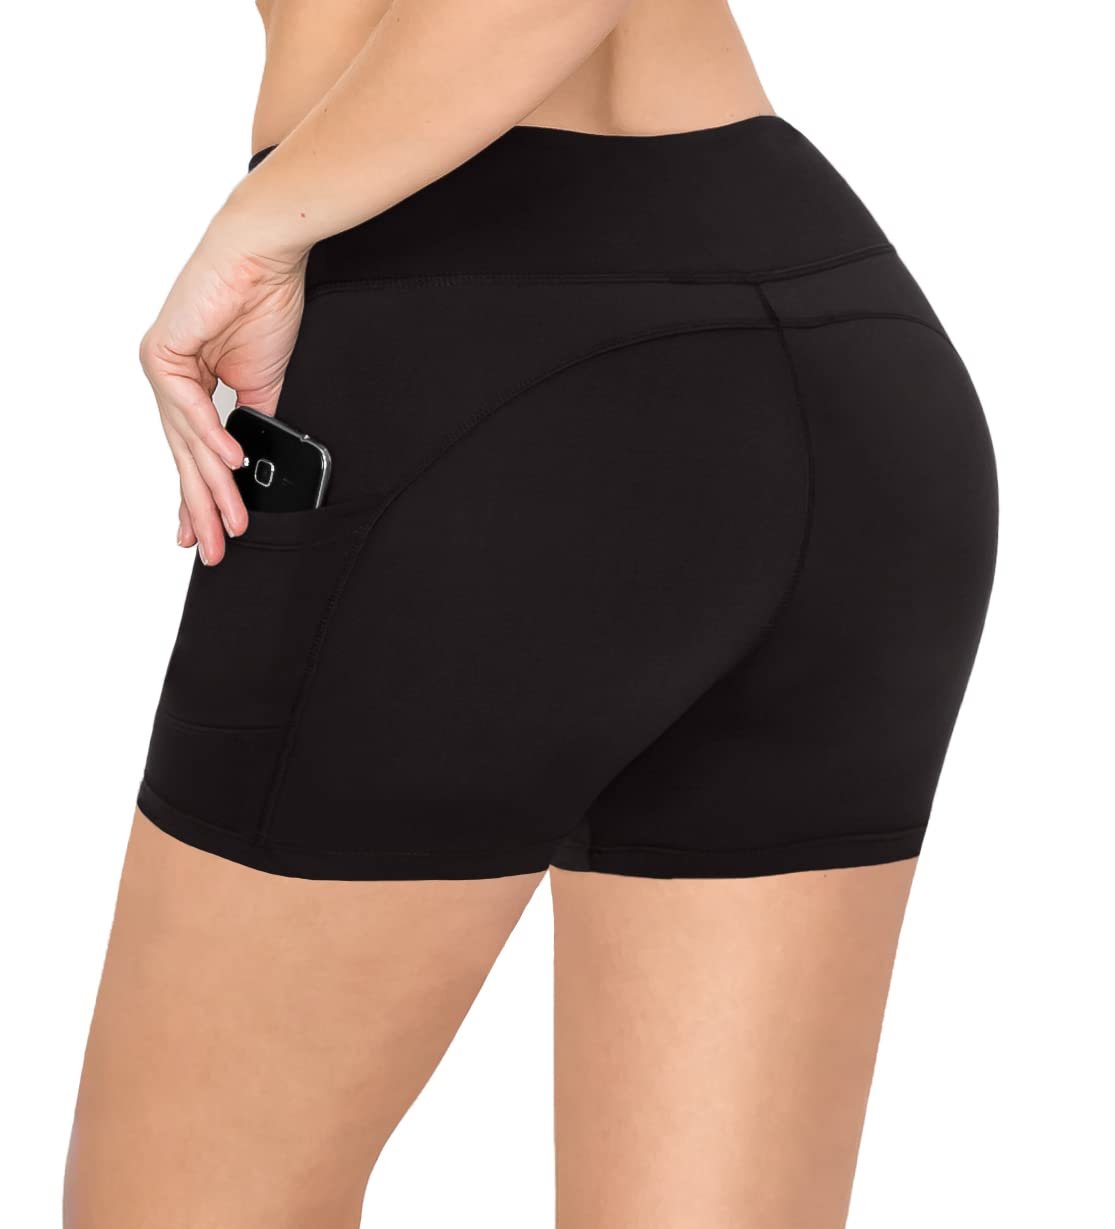 SATINA Biker Shorts for Women - High Waist Biker Shorts with Pockets - Yoga Shorts for Regular & Plus Size Women (5-Inch, Large, Black Shorts)